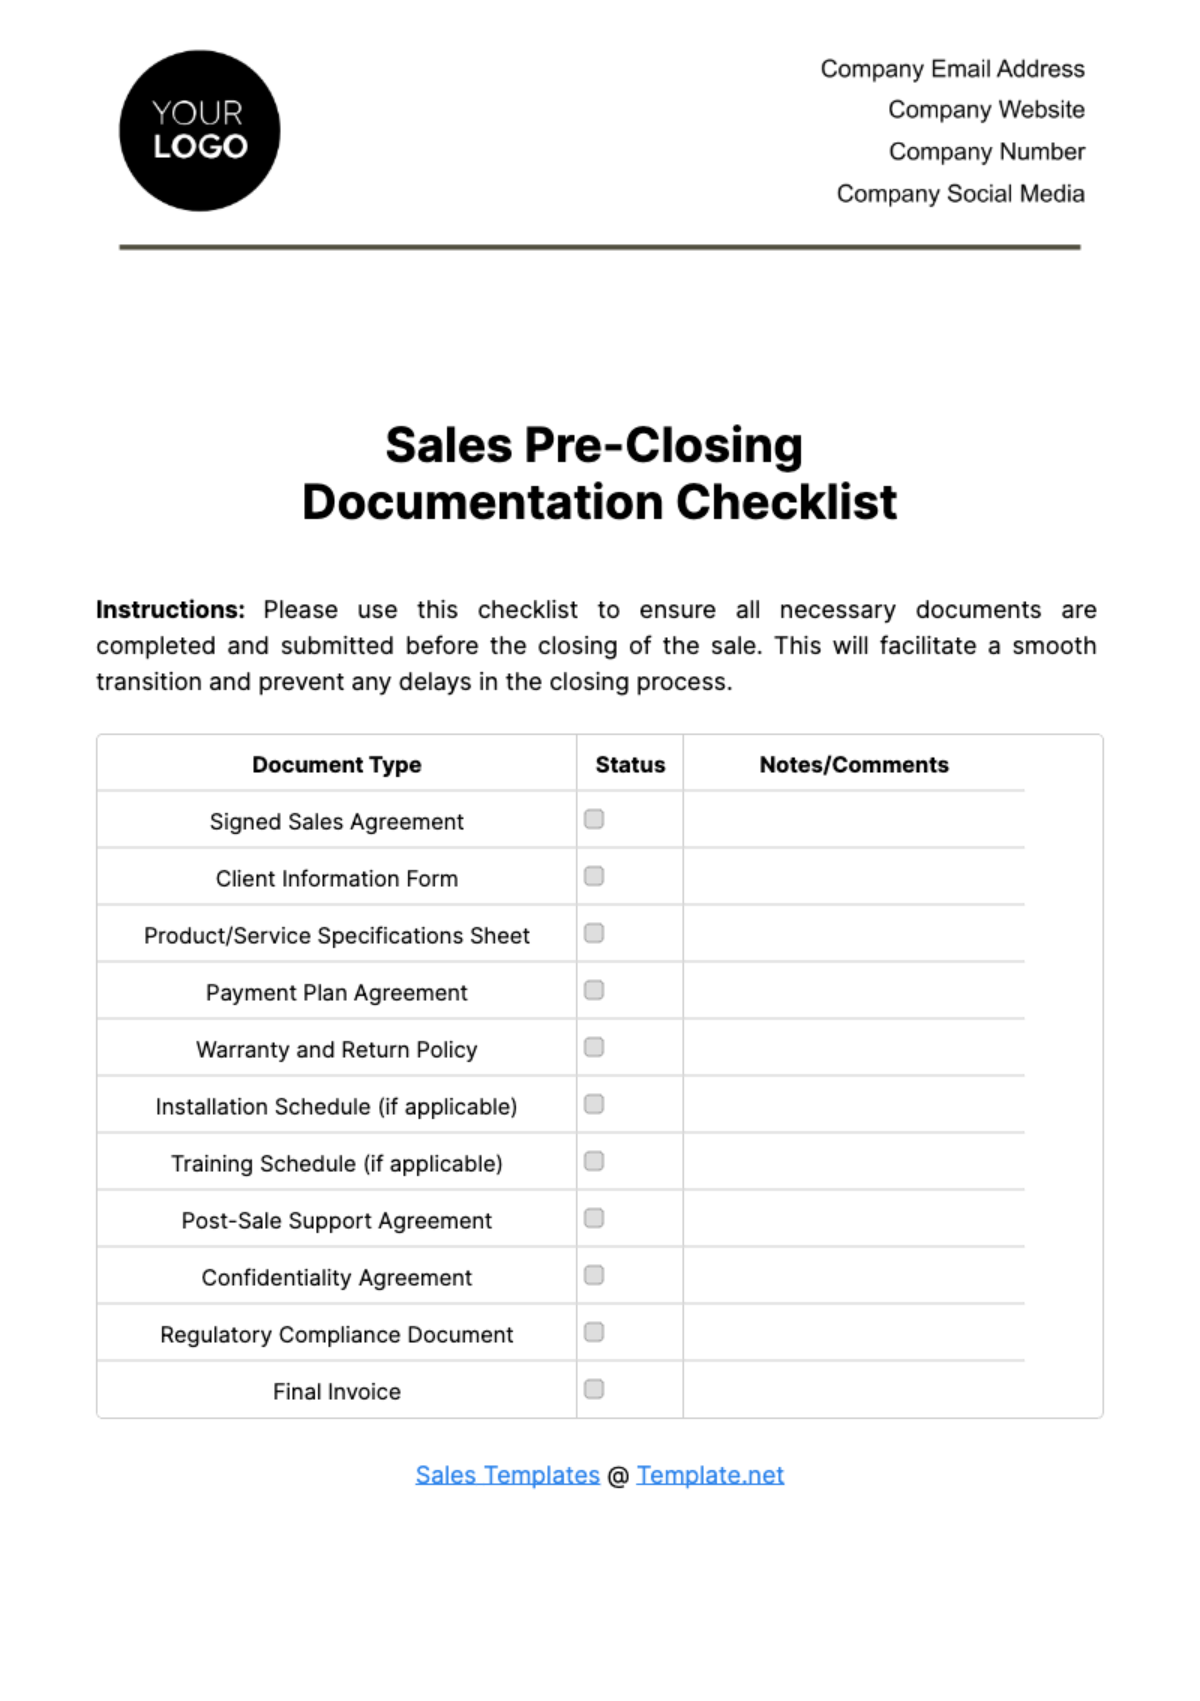 Sales Pre-Closing Documentation Checklist Template